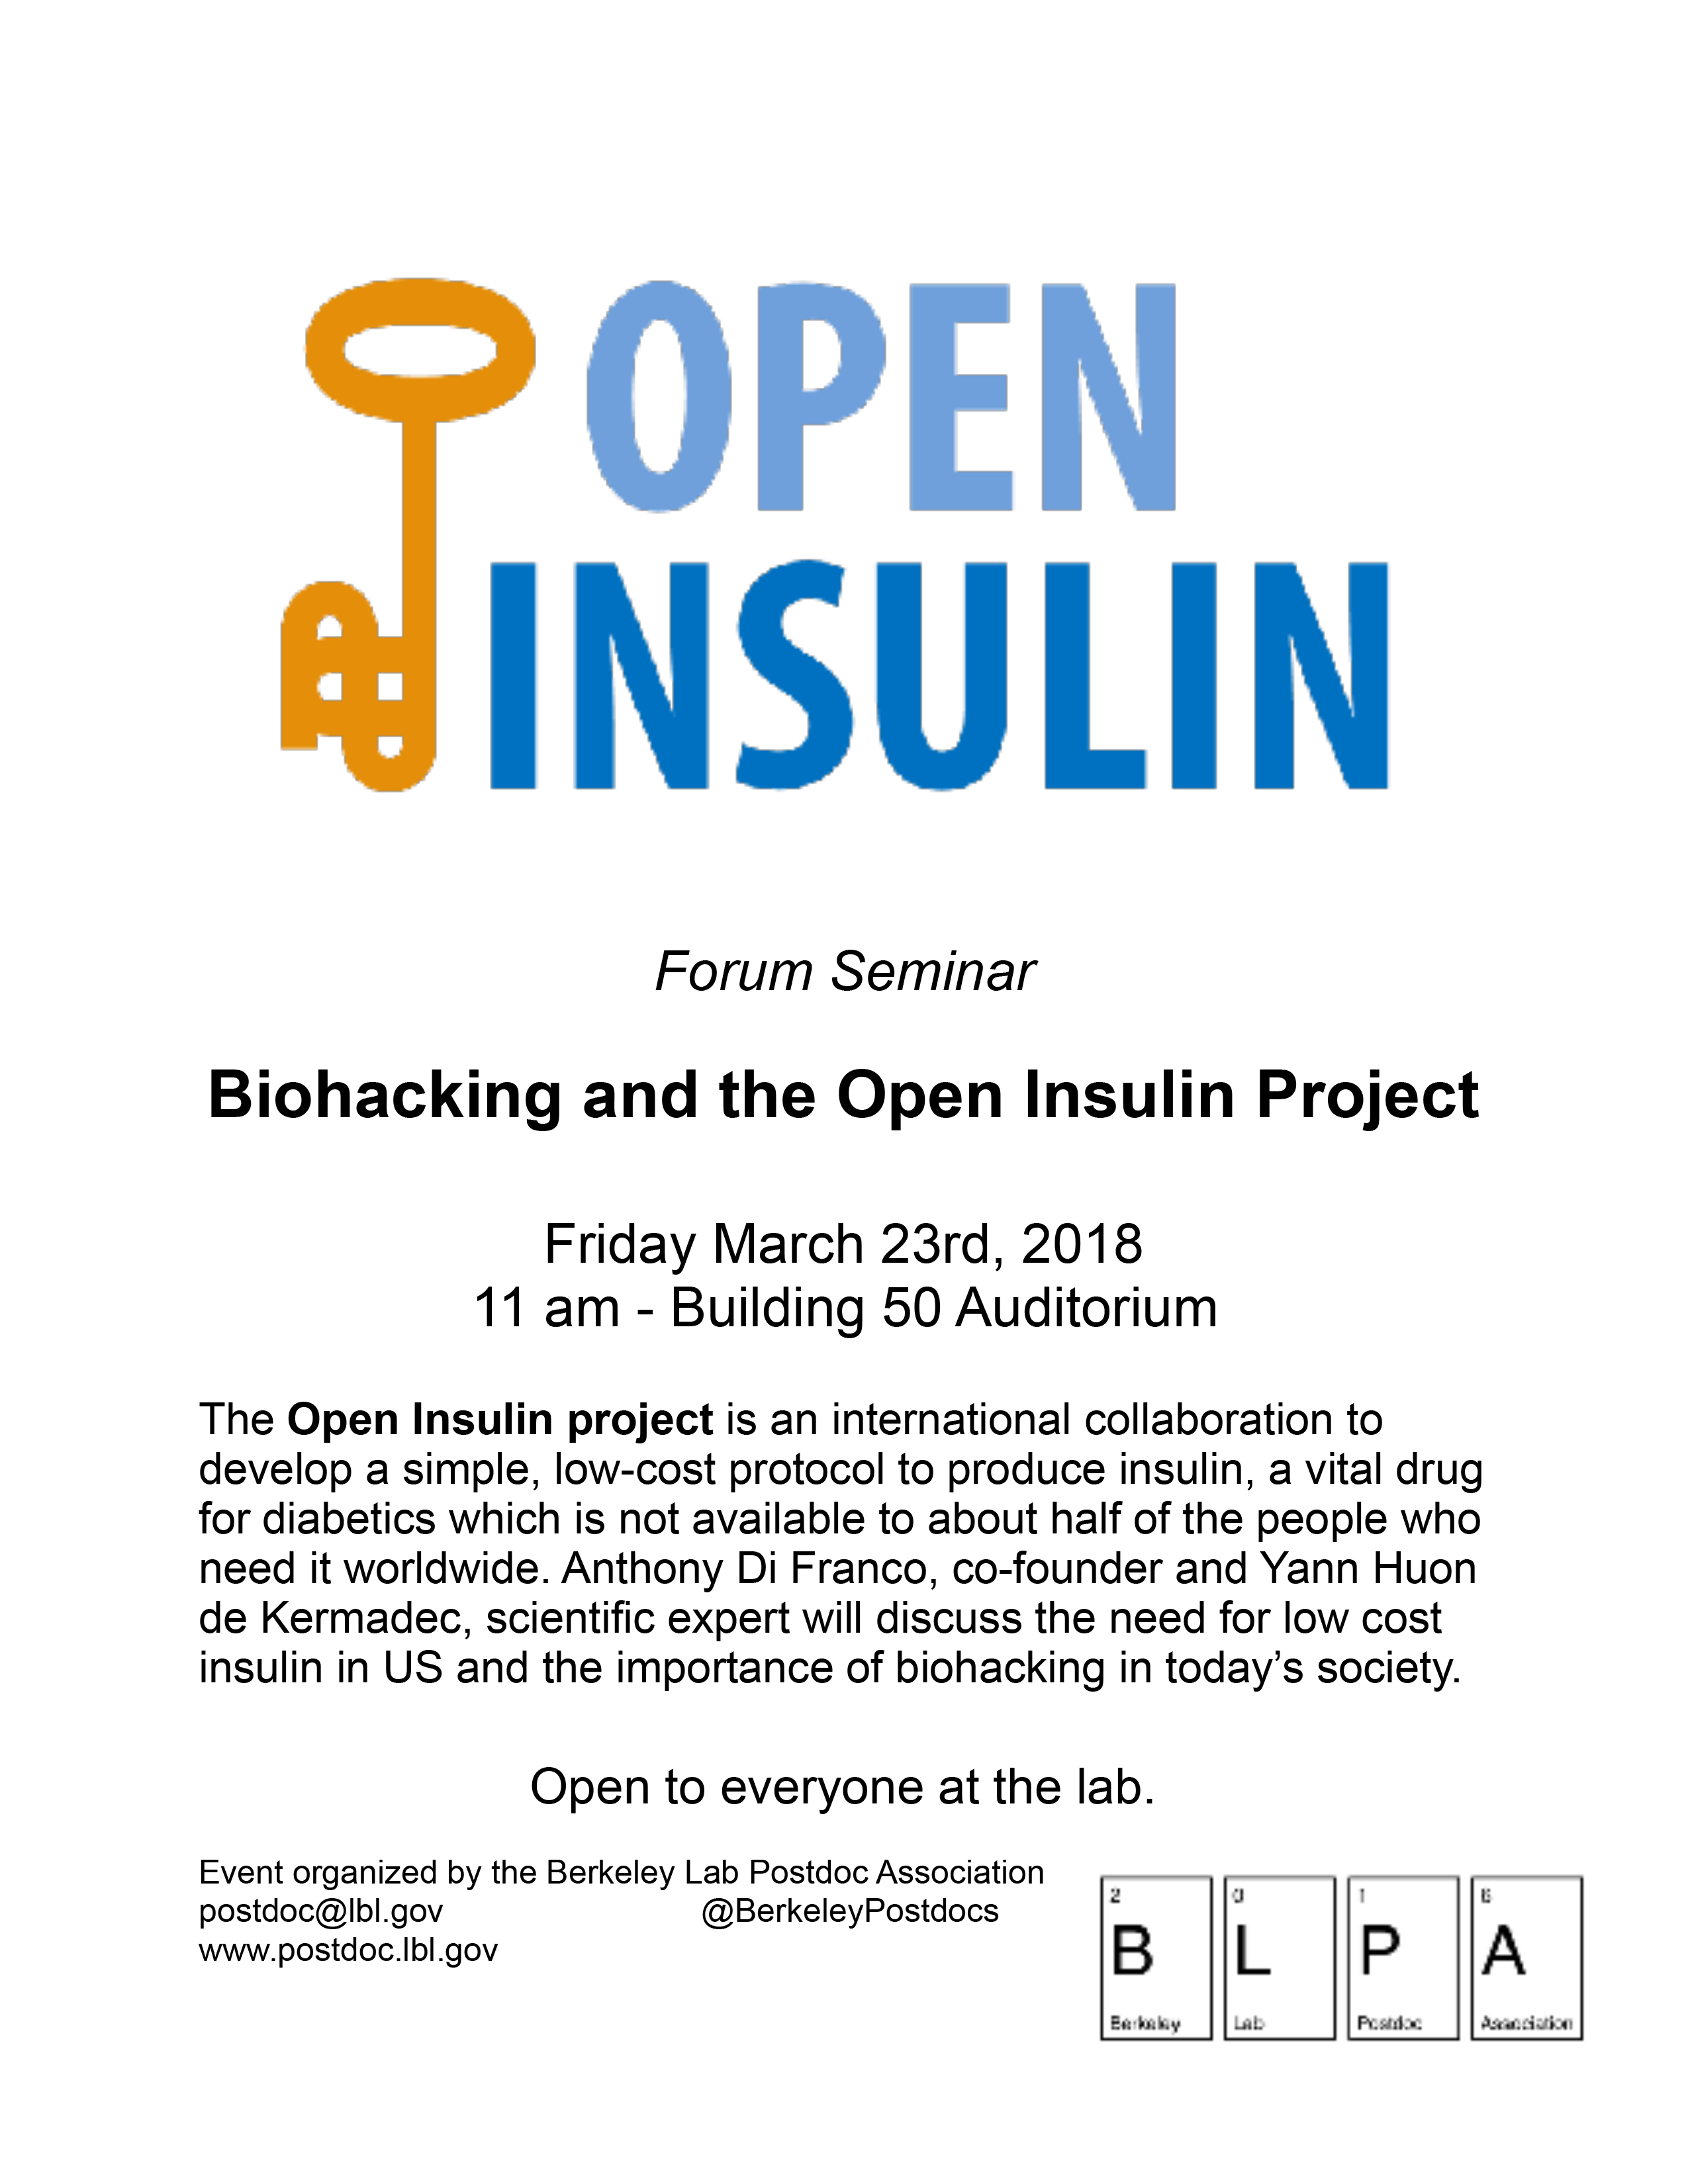 Open Insulin – Forum Seminar